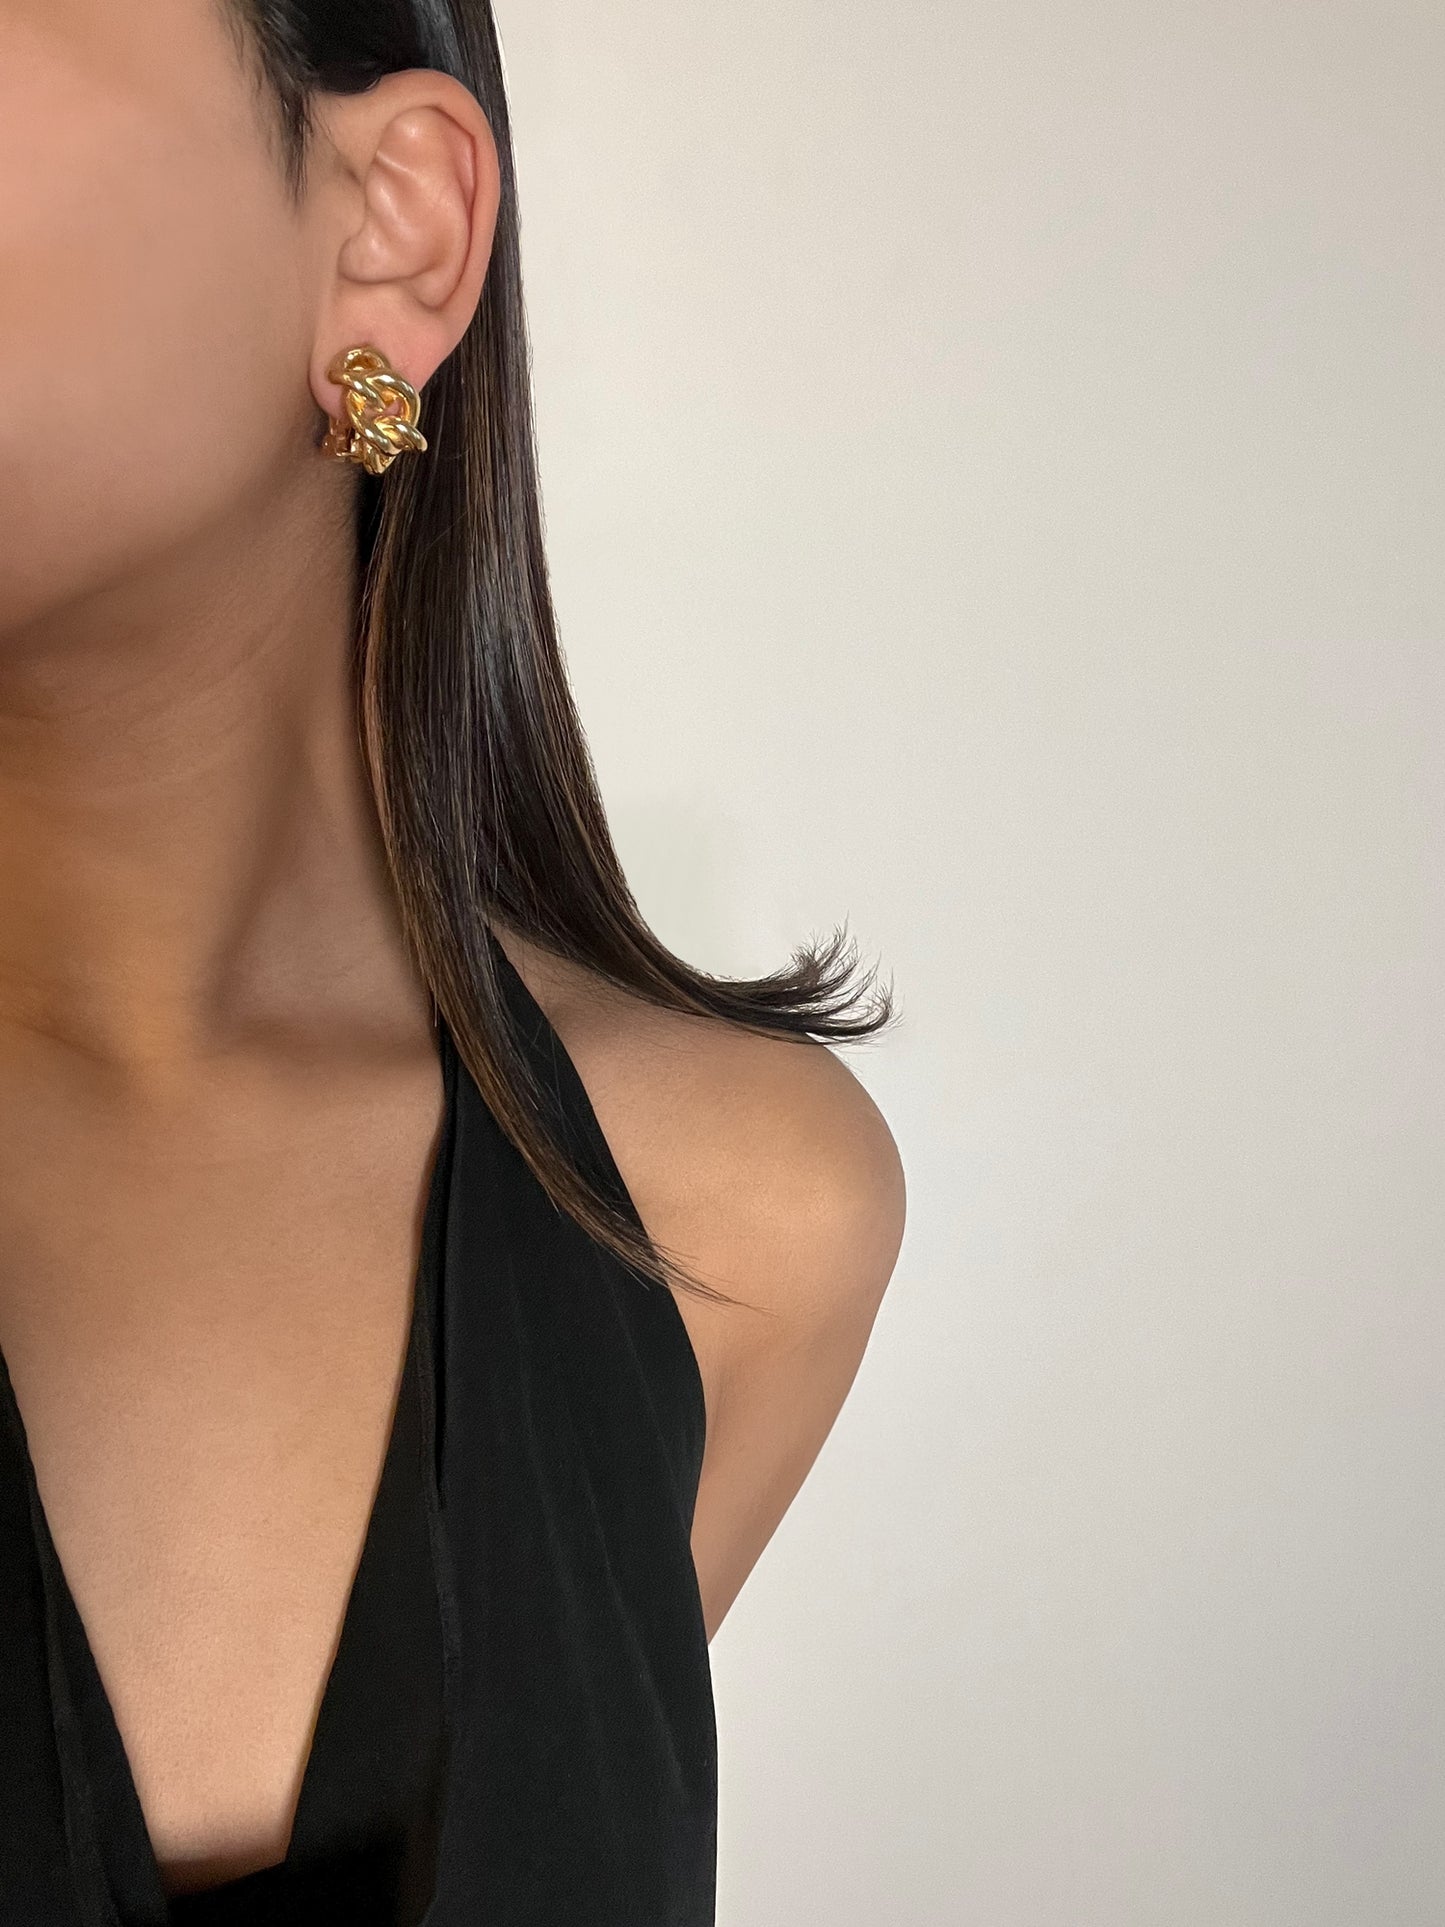 Dior Chain Earrings